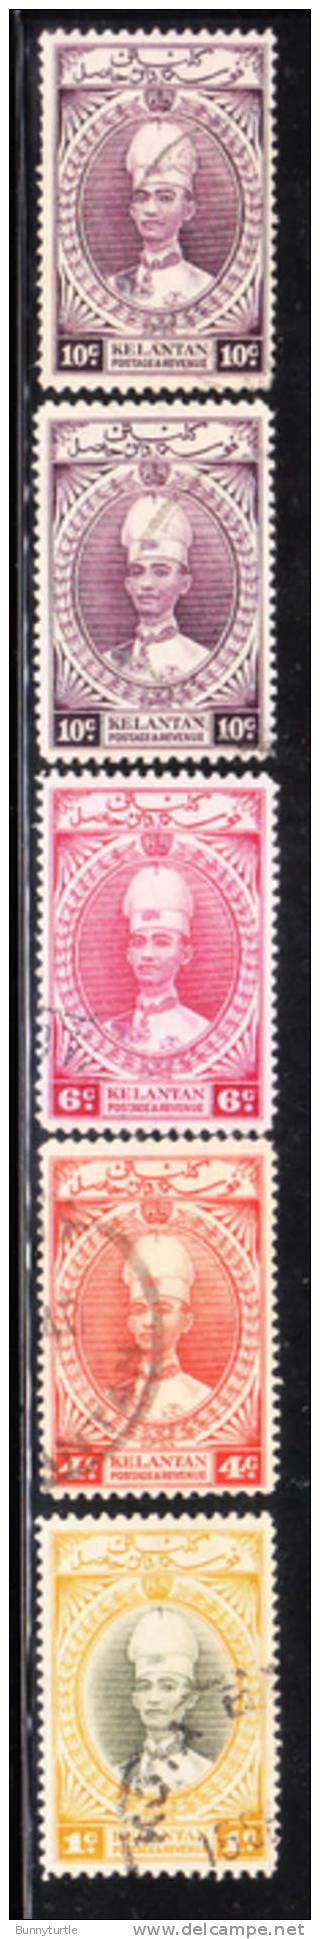 Malaya Kelantan 1937-40 Sultan Ismail 5v Used - Kelantan